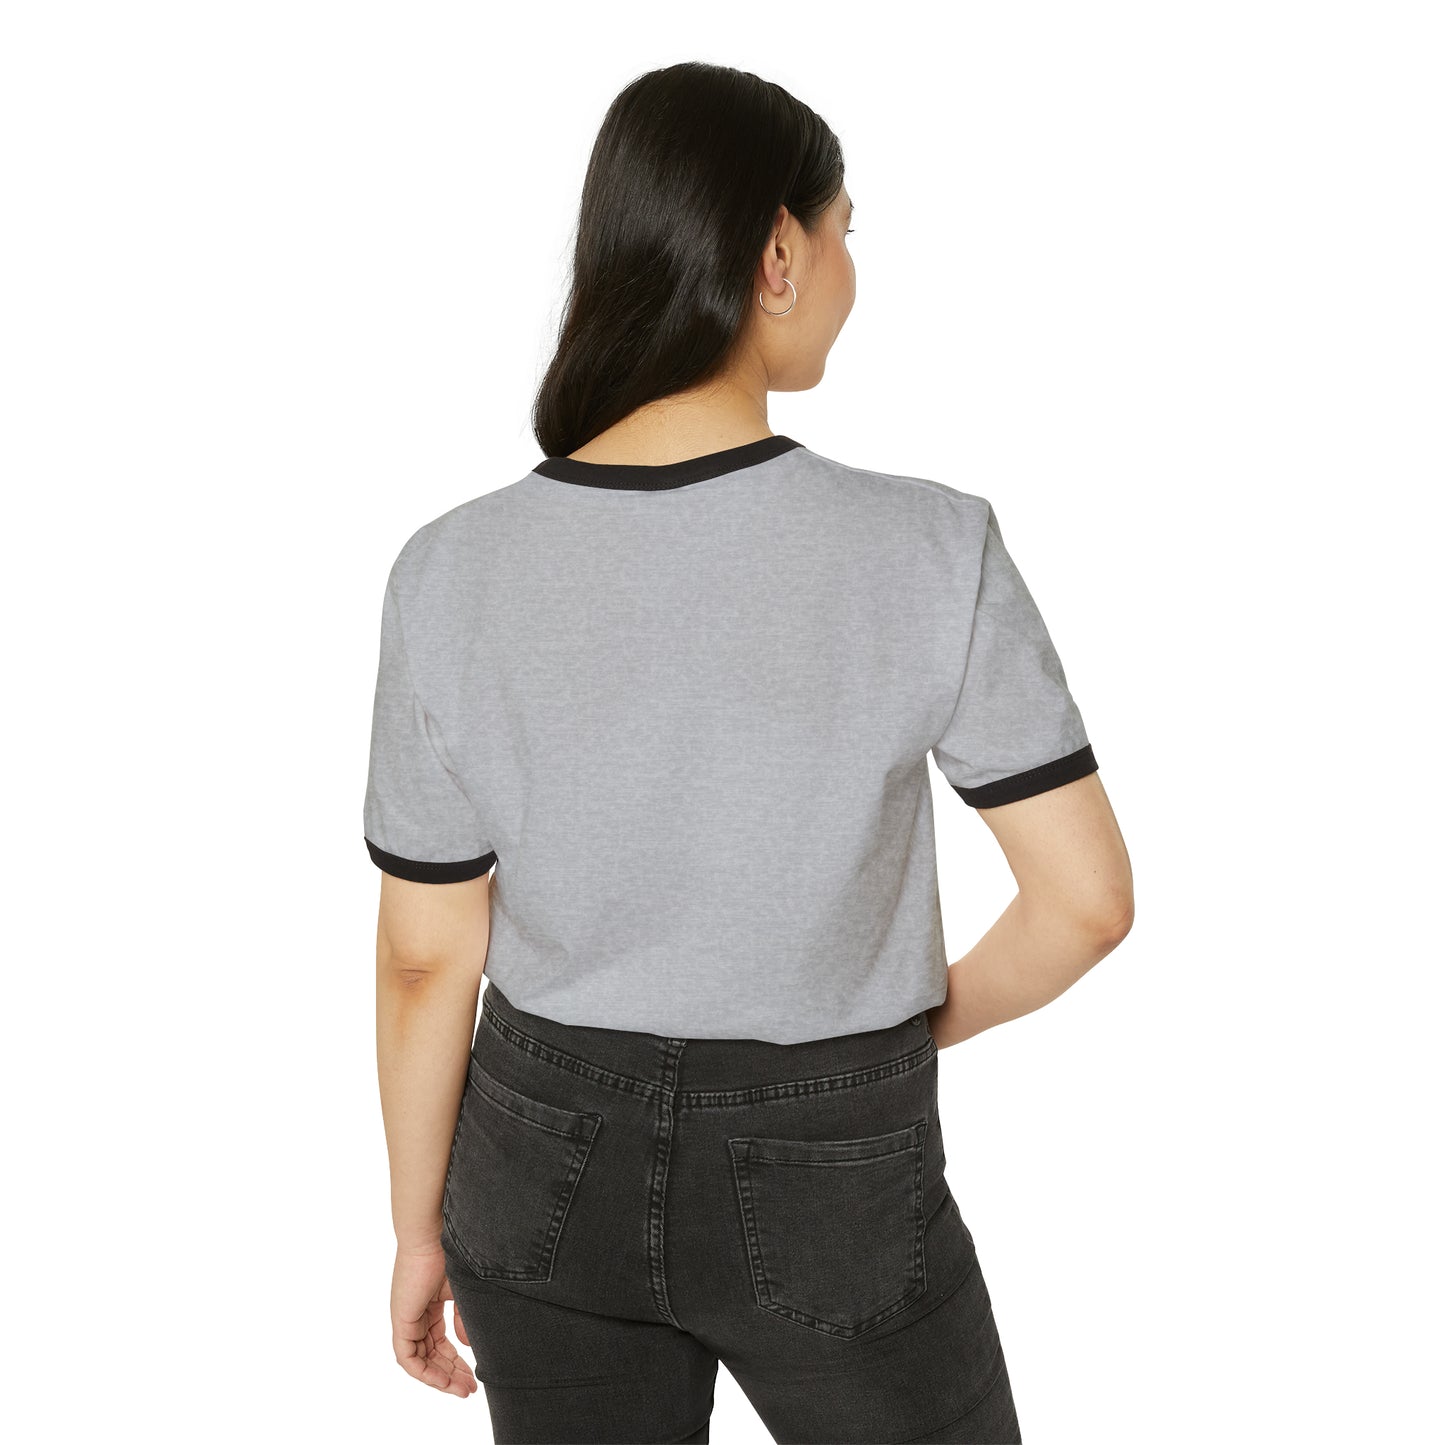 Unisex Cotton Ringer T-Shirt